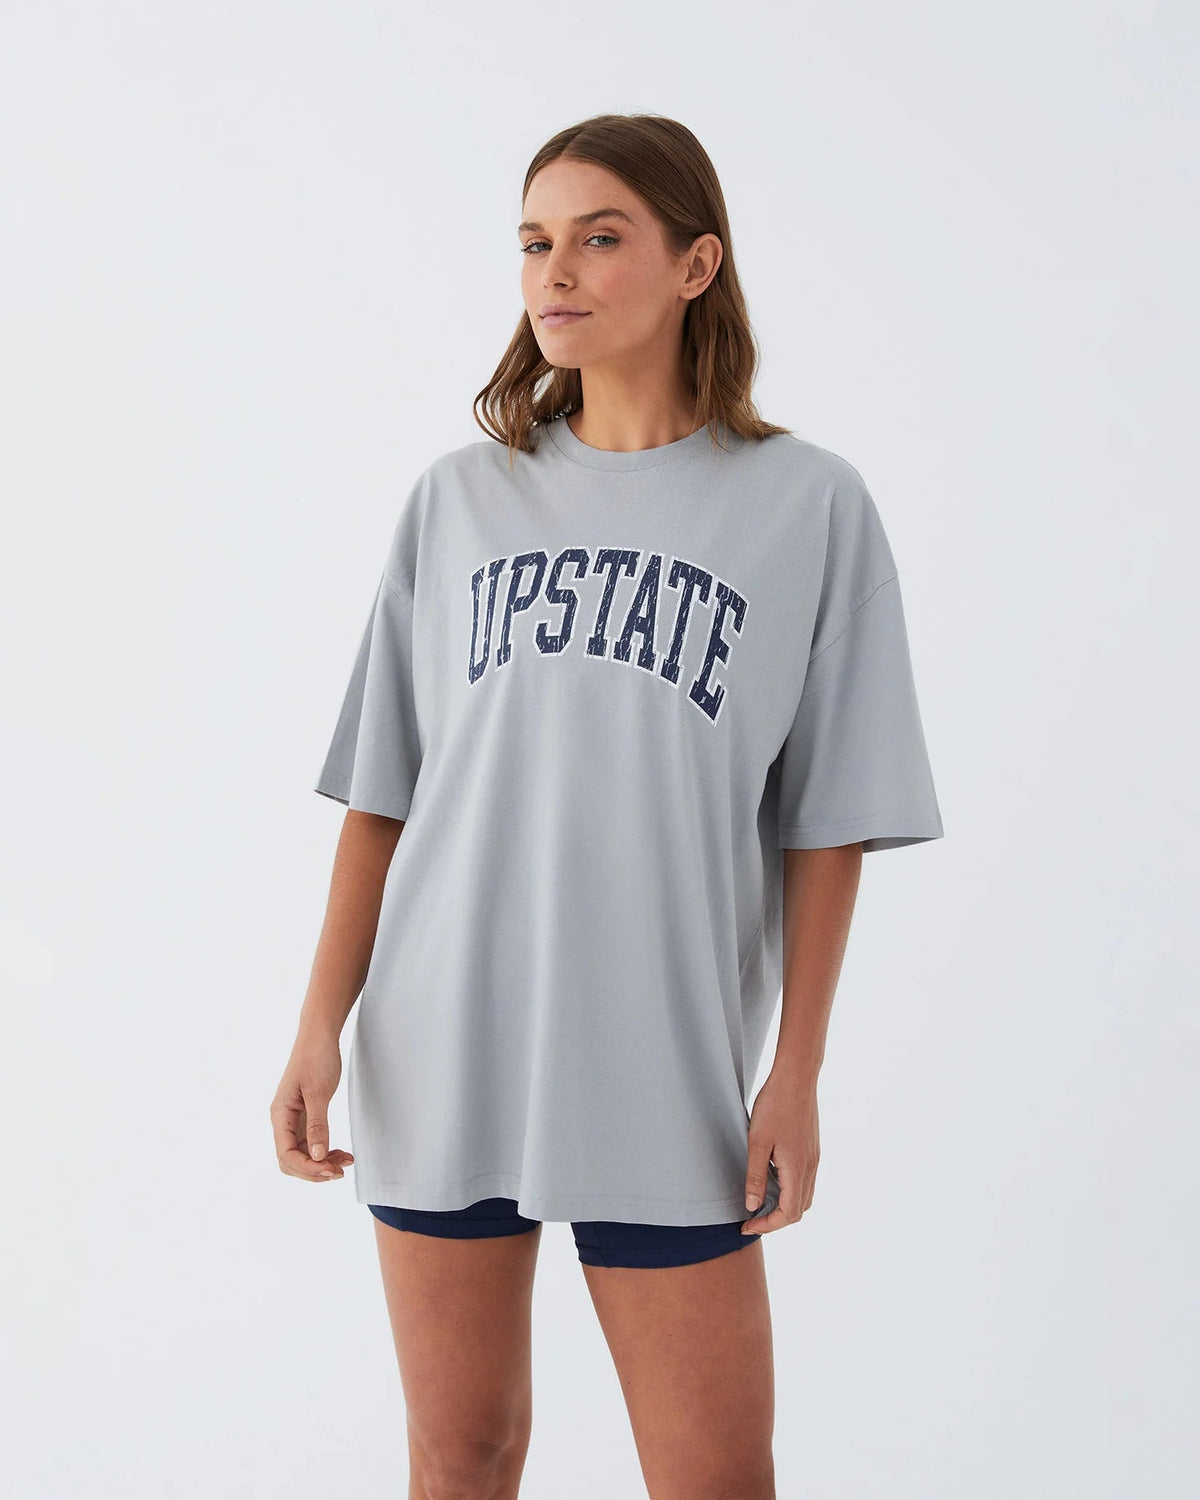 Hustle Tee - Winter Grey / Upstate Crackle - Sare StoreUpstate SportT-shirt